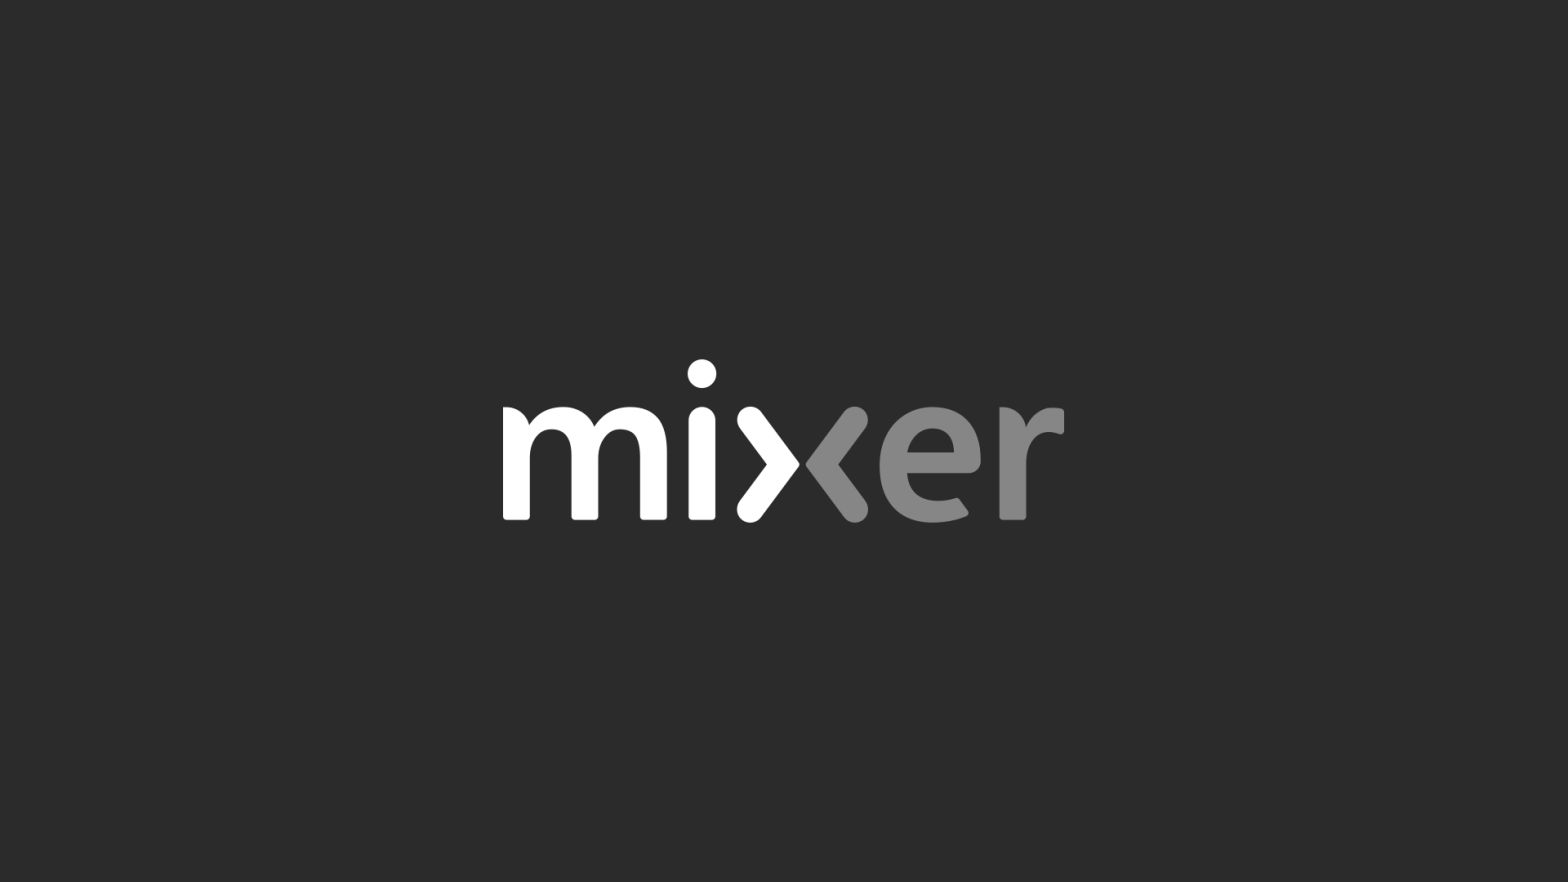 Image: Microsoft/Mixer